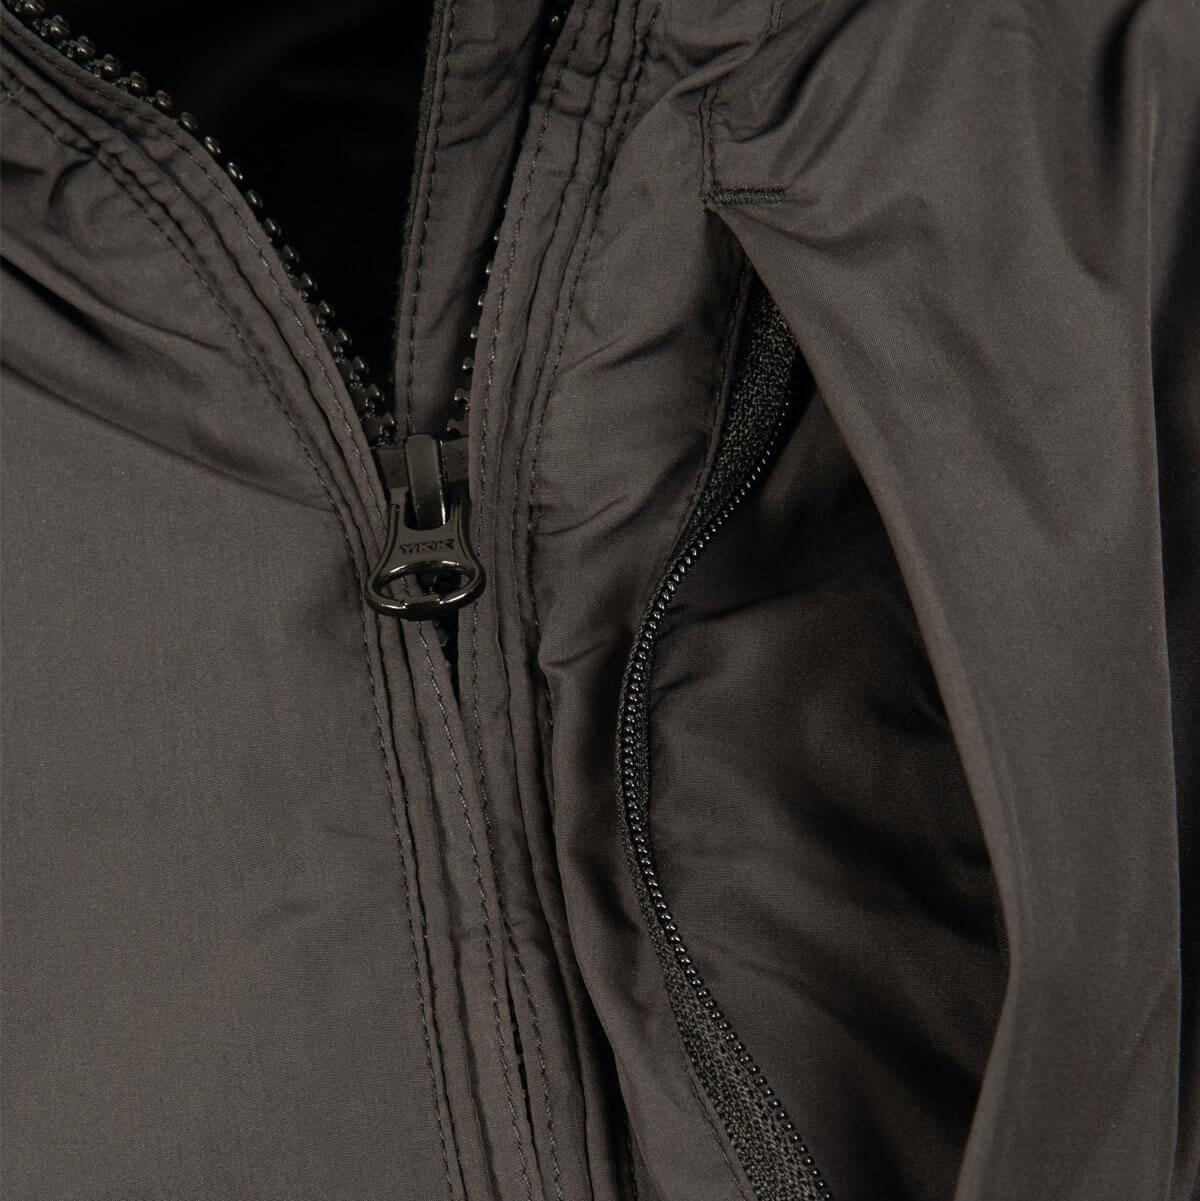 Snugpak Arrowhead Insulated Jacket Black - John Bull Clothing